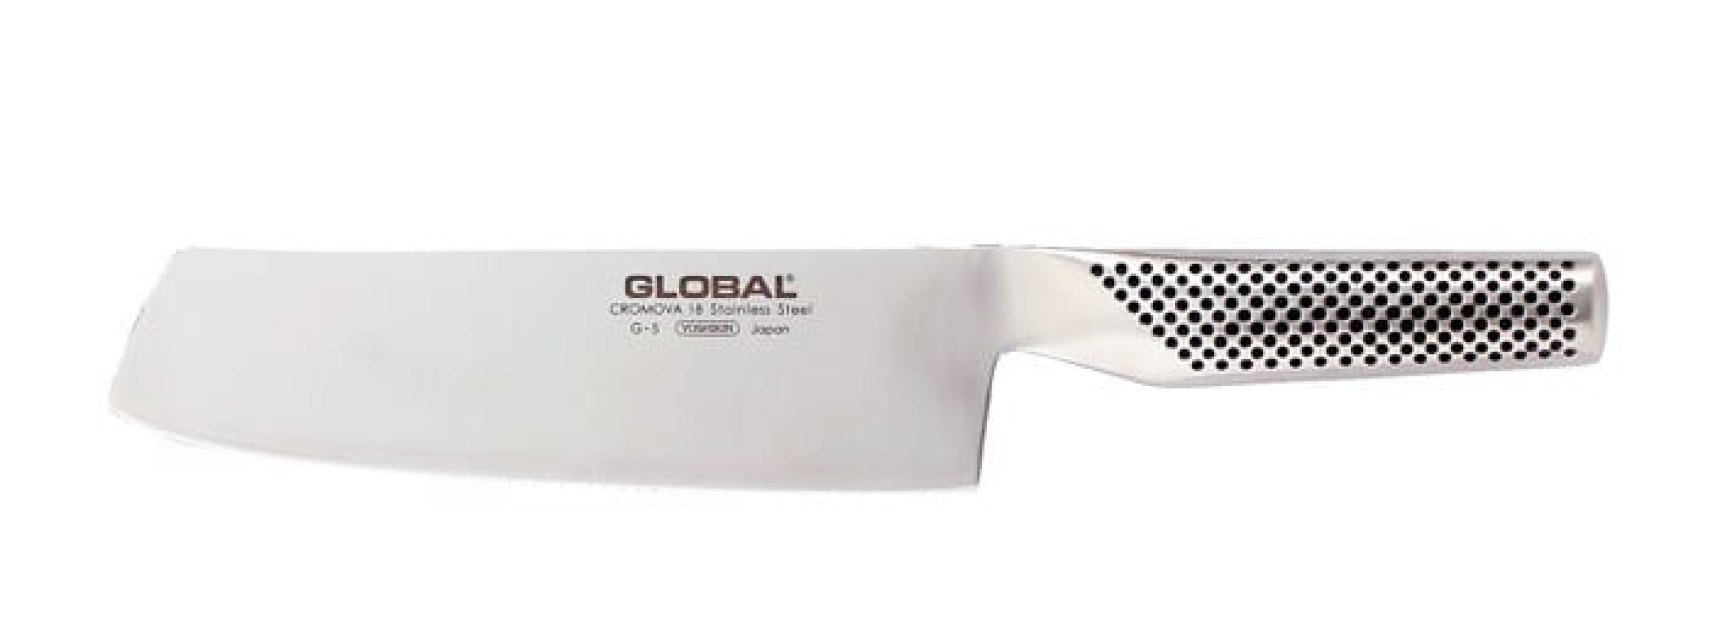 Grönsakskniv G-5, 18cm - Global